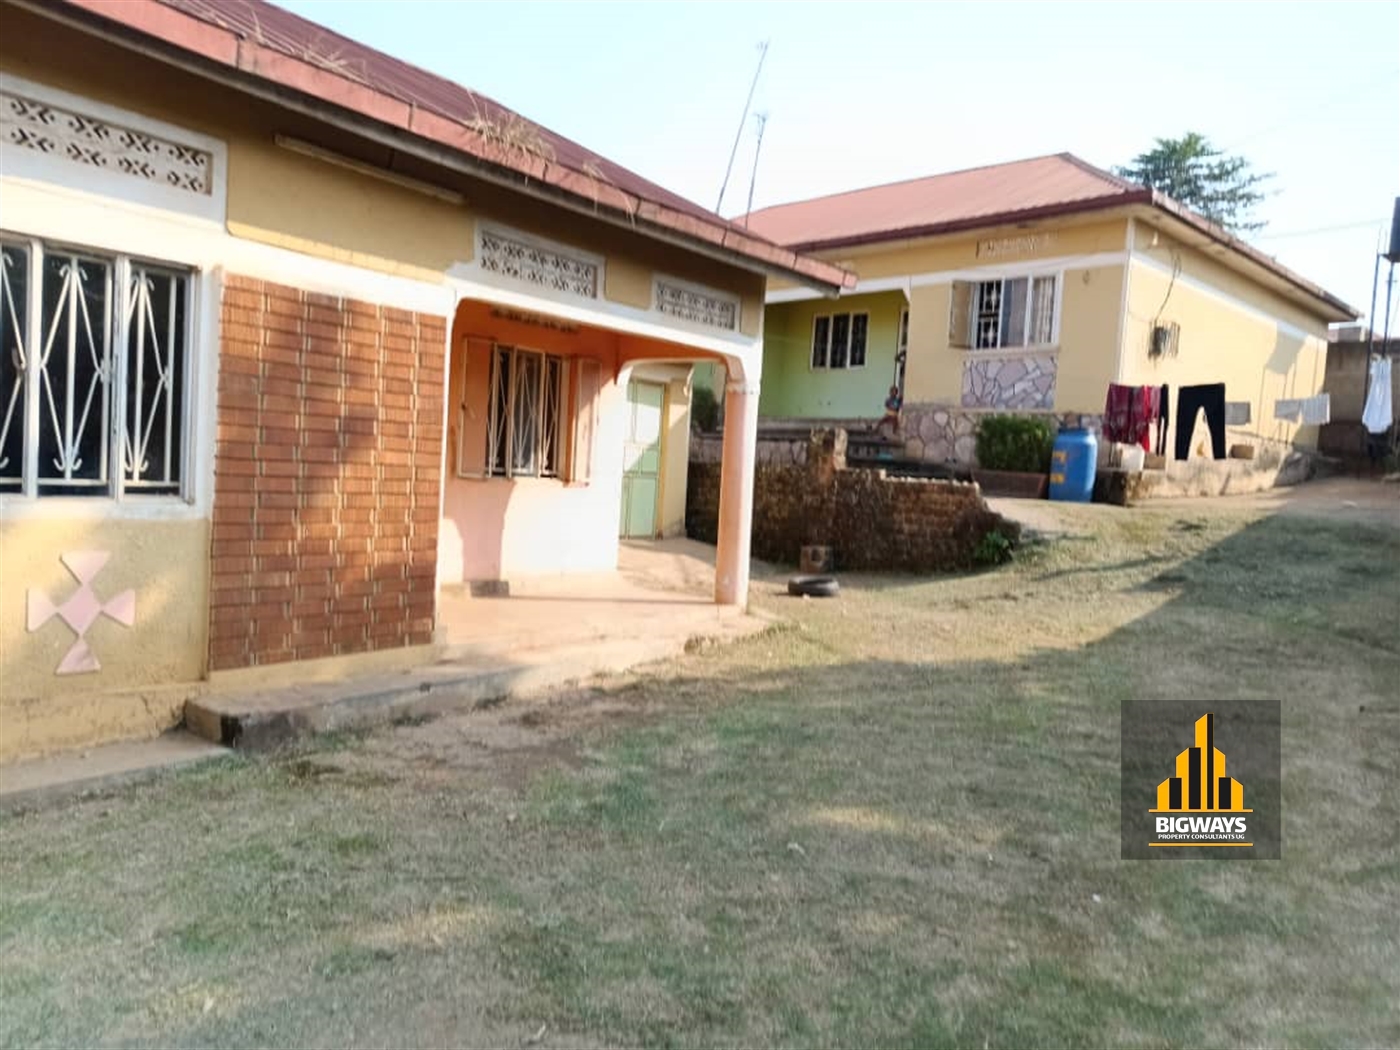 Rental units for sale in Kigunga Mukono